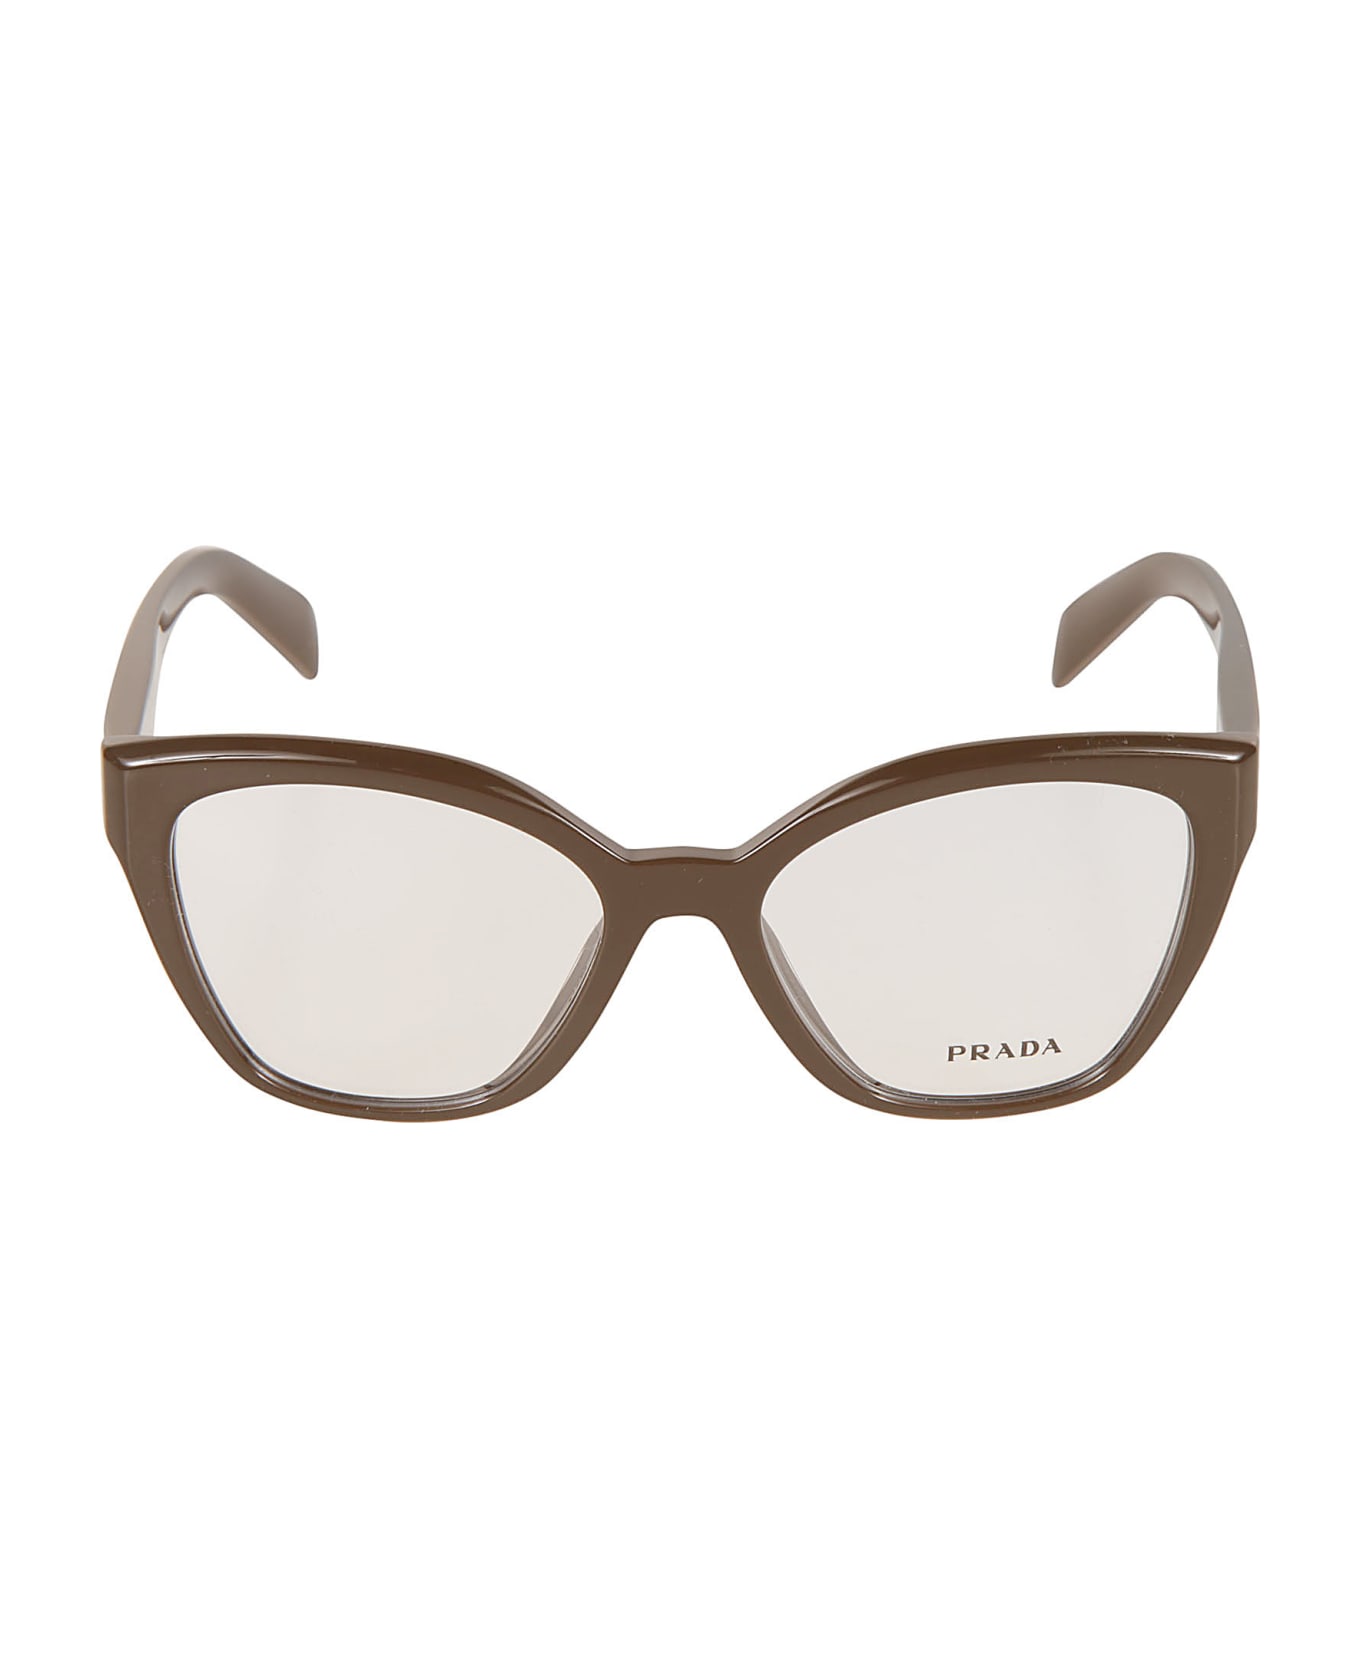 Prada Eyewear Vista Frame - 15L1O1